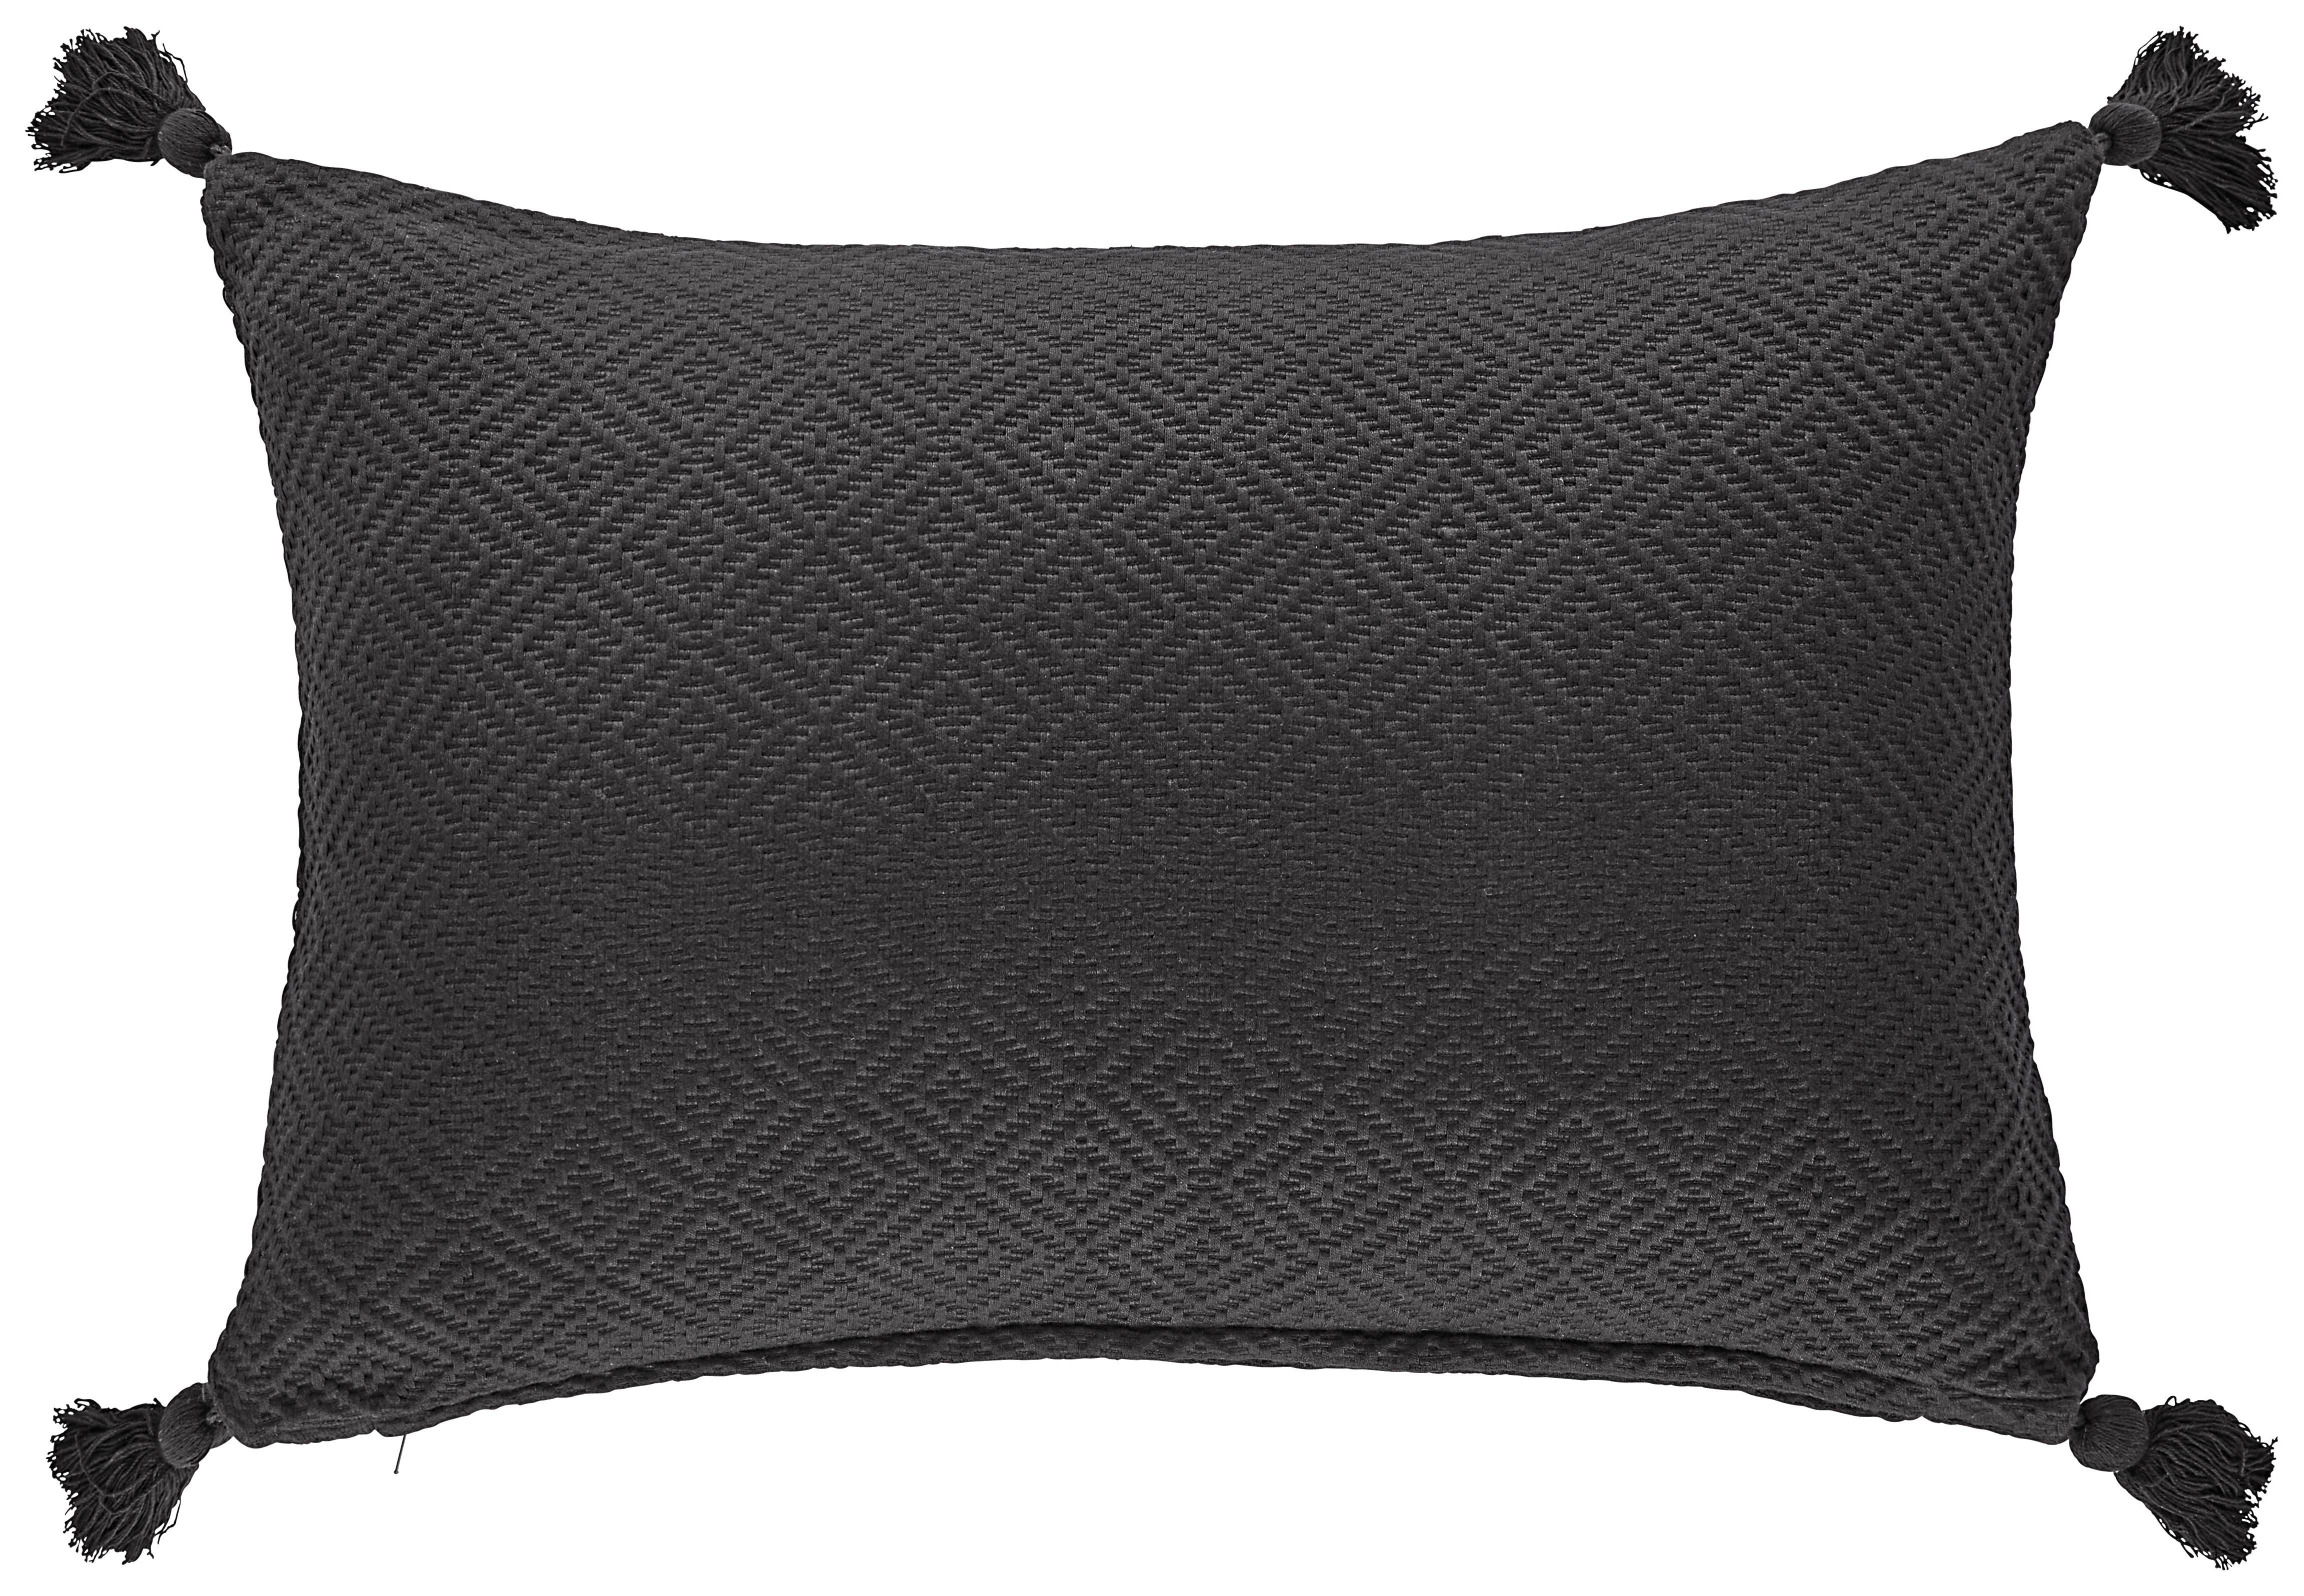 Dekorační Polštář Frieda, 40/60 Cm, Černá - černá, Lifestyle, textil (40/60cm) - Modern Living